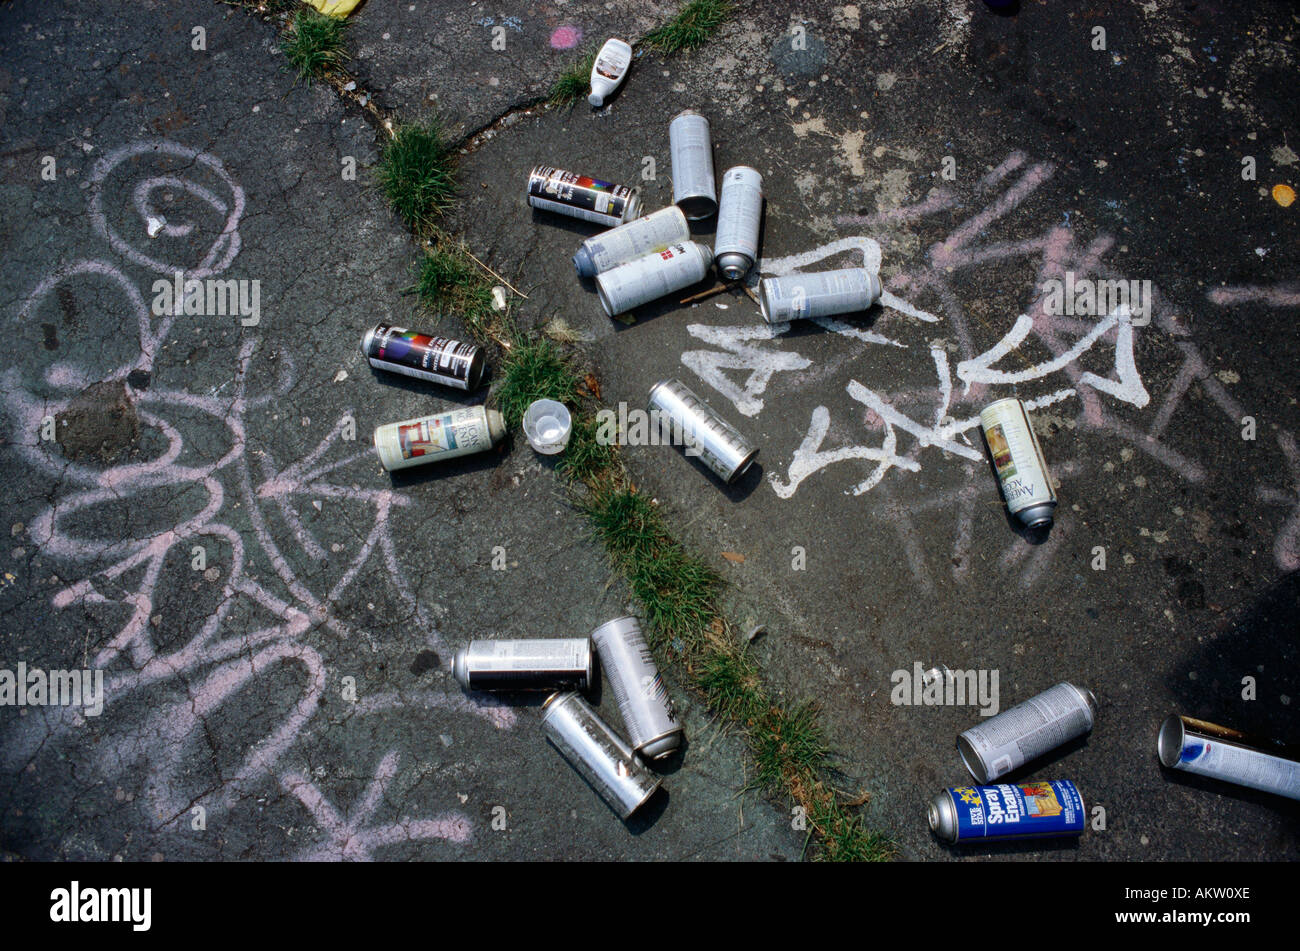 Manhattan New York USA verworfen Aerosoldosen aus Aluminium am Boden Stockfoto